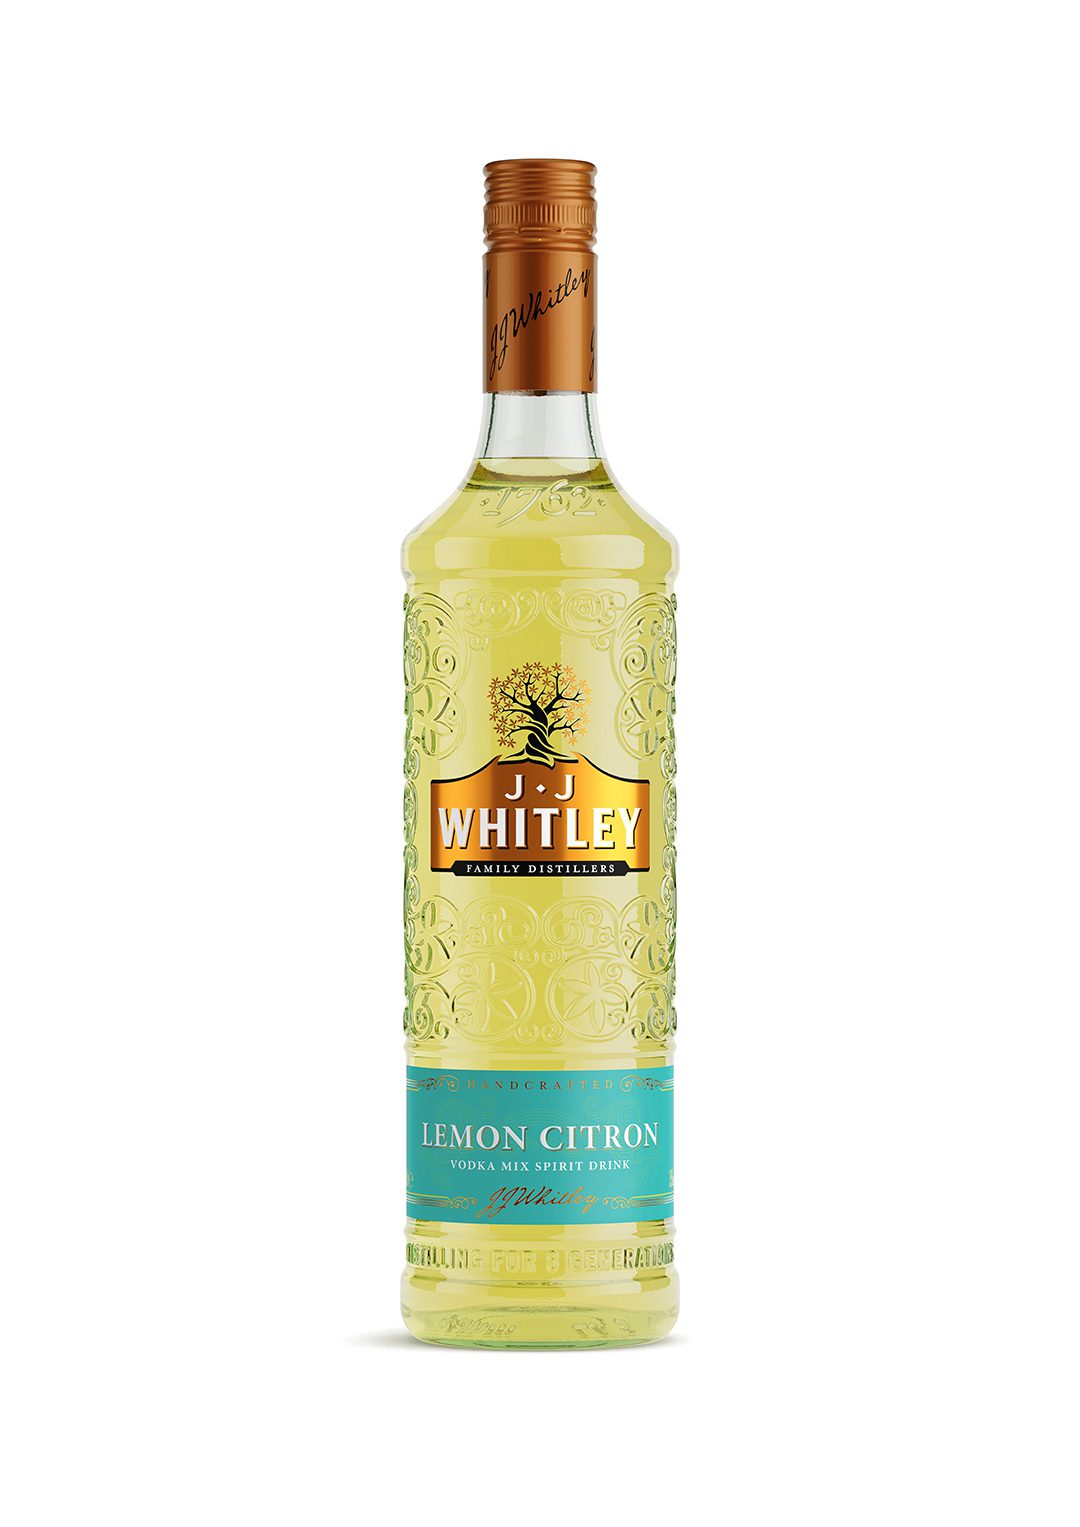 JJ Whitley Lemon Citron vodka